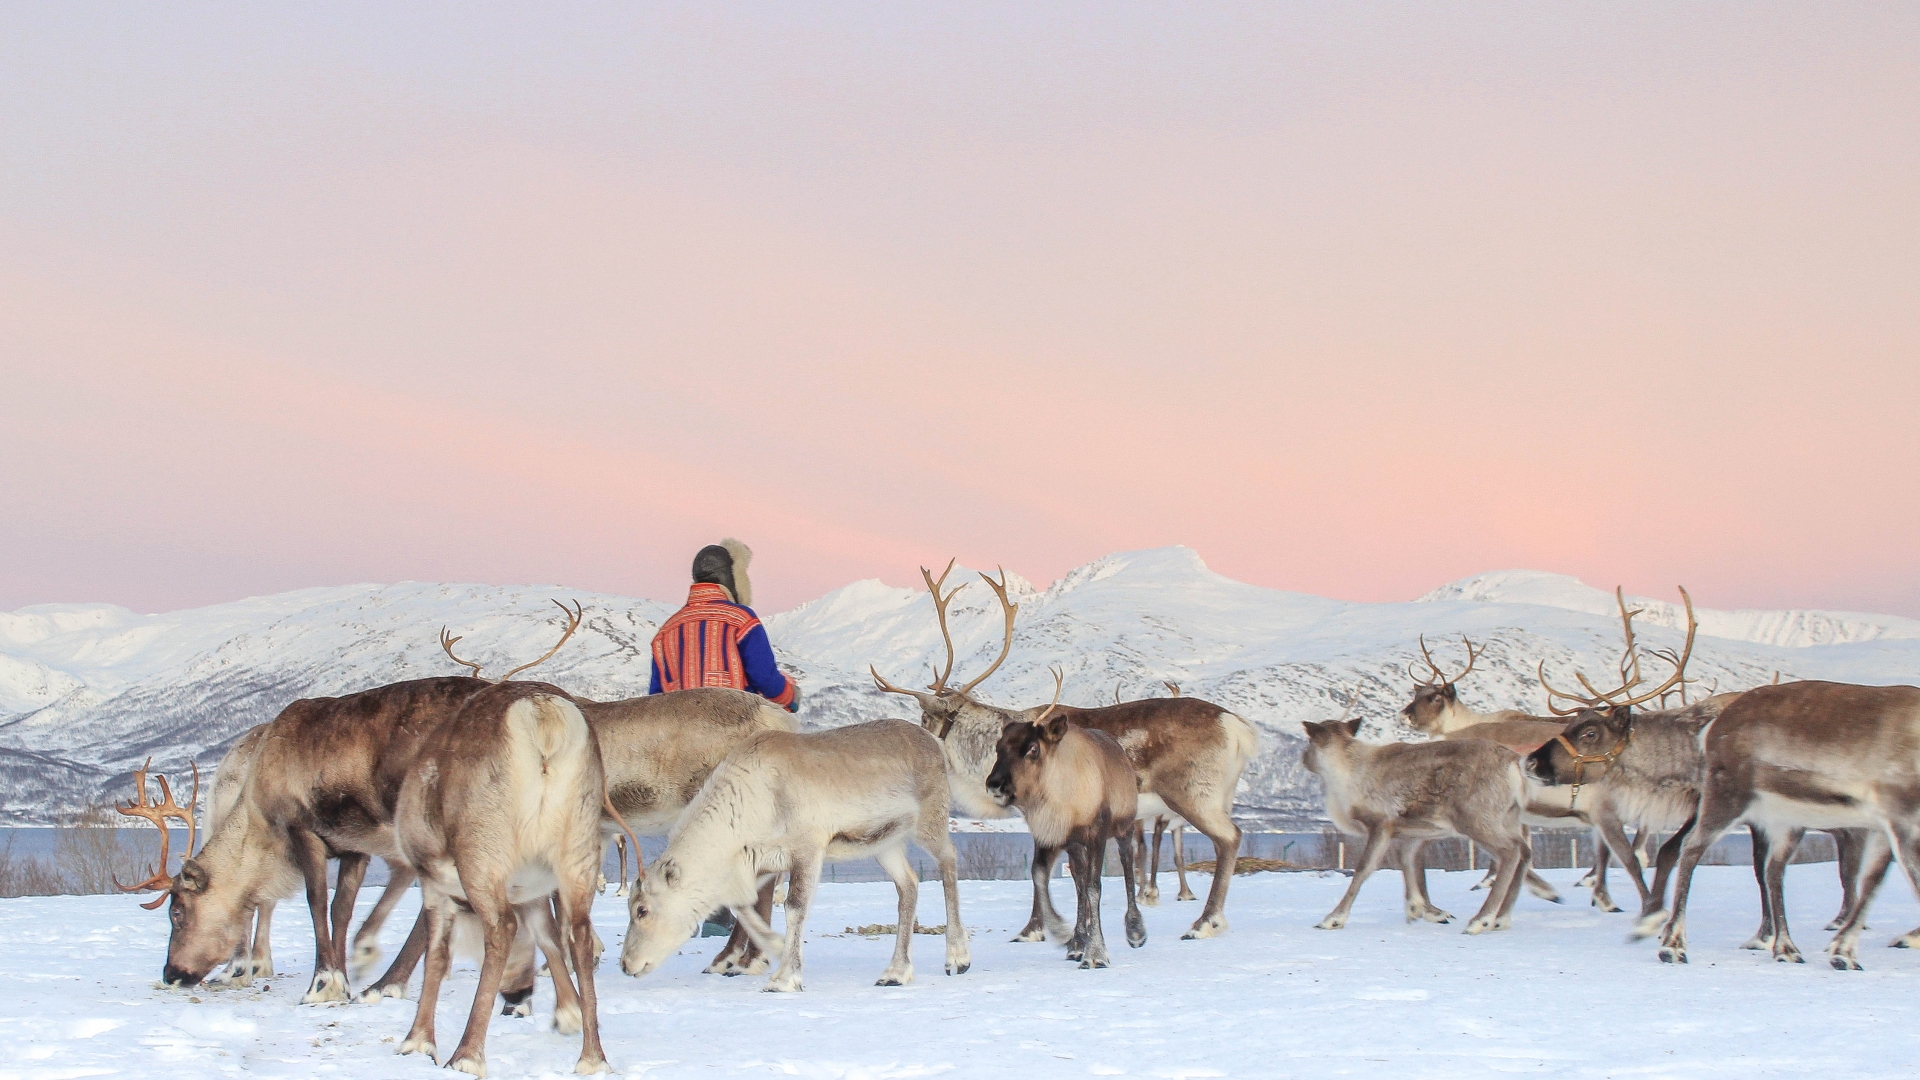 a man herding a herd of reindeer